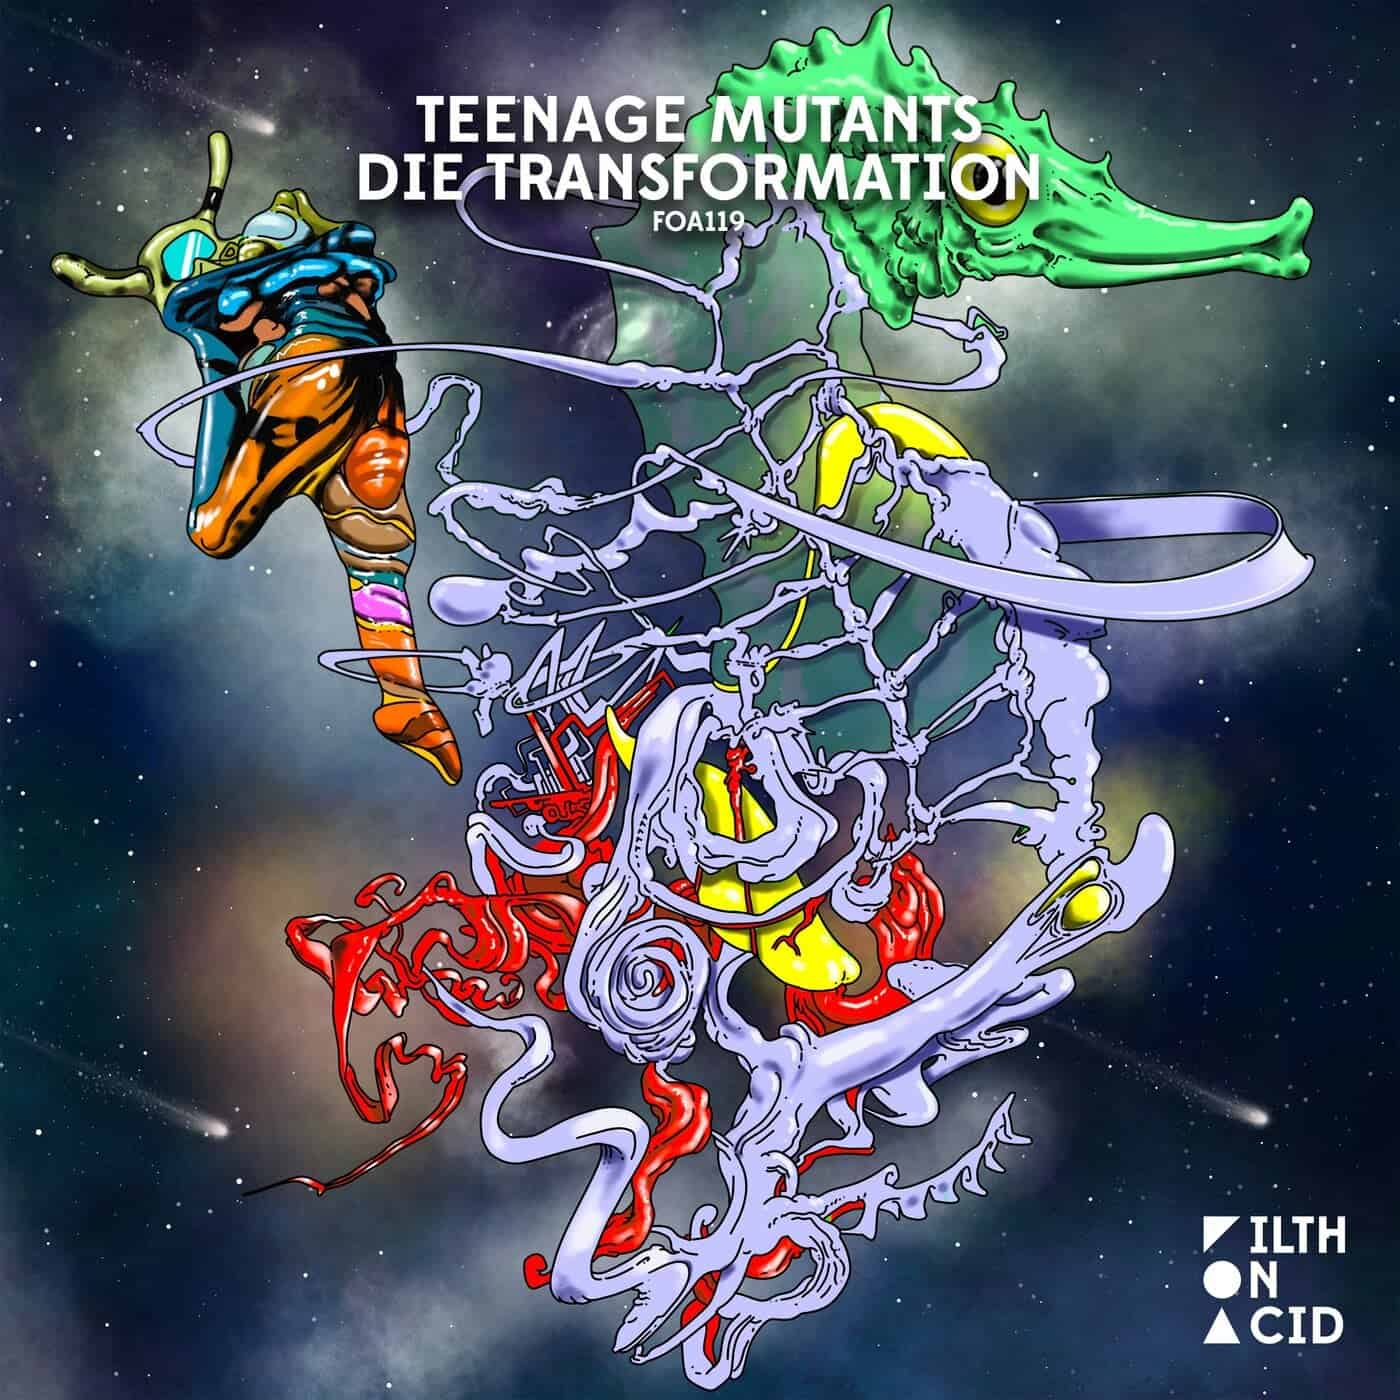 image cover: Teenage Mutants, Dok & Martin, Heerhorst - Die Transformation / FOA119